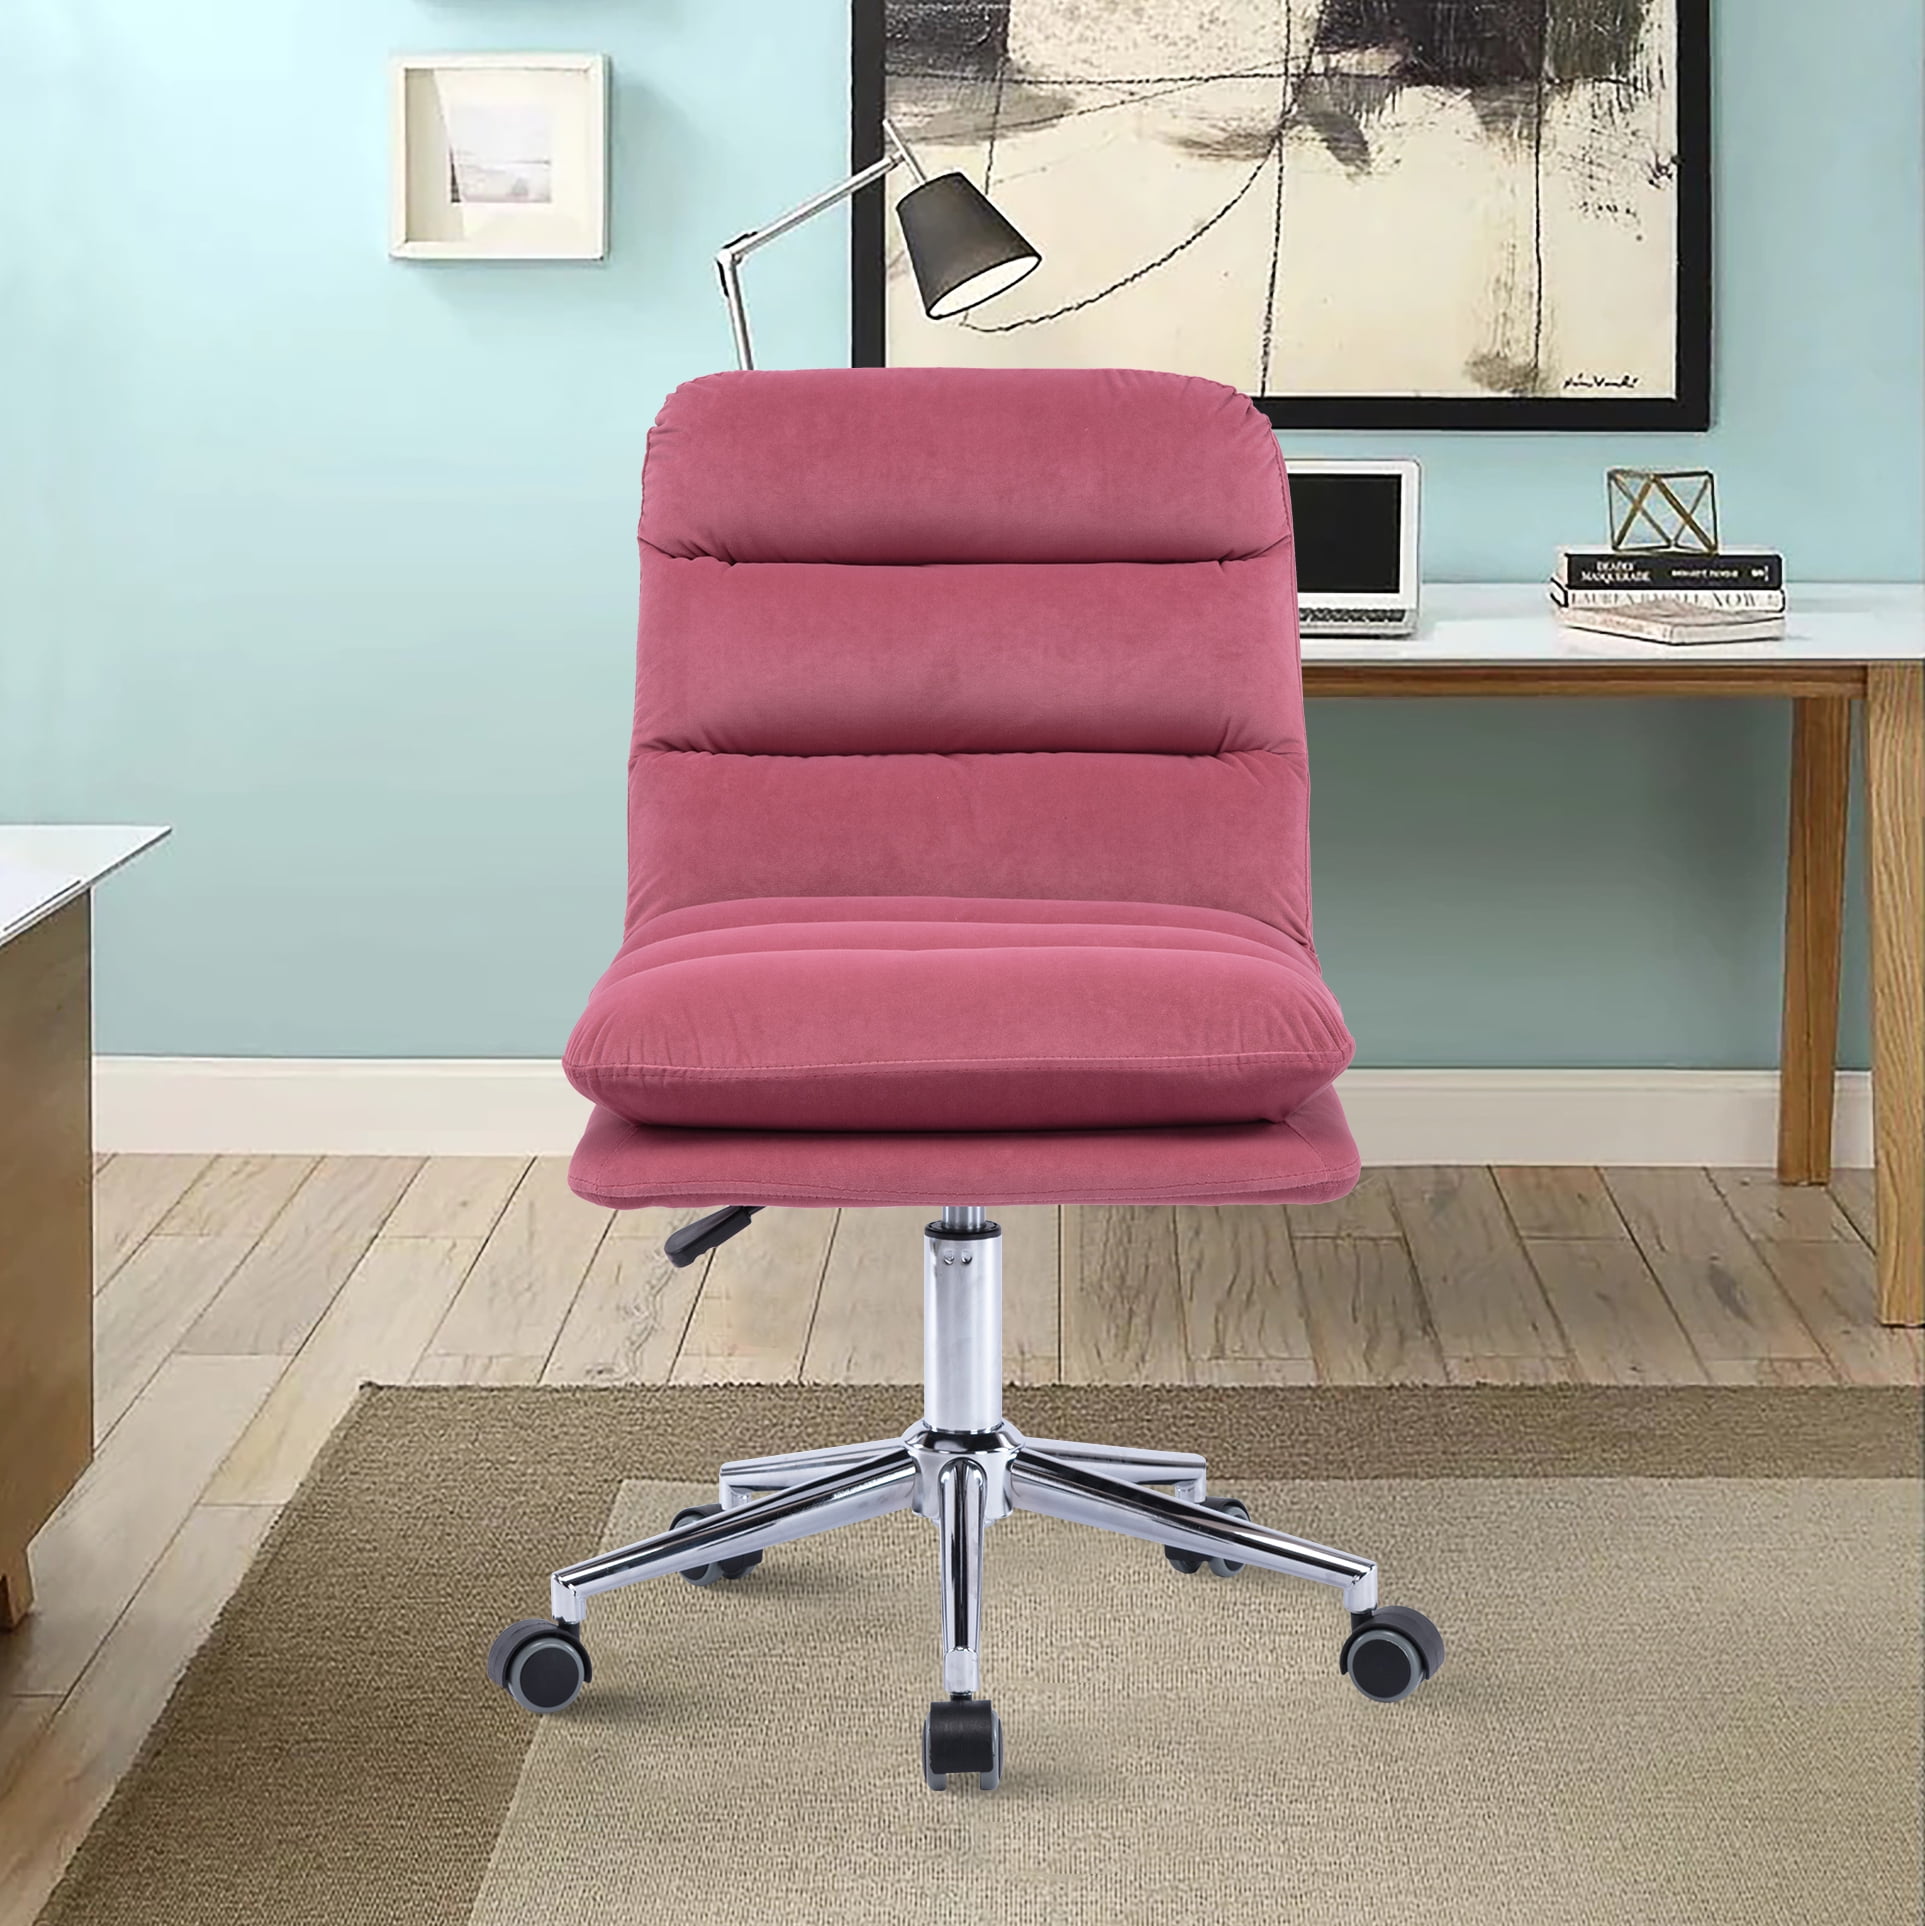 Details about   Mesh Office Computer Chair Mid-Back Ergonomic Backrest Desk Seat Adjustable Pink 